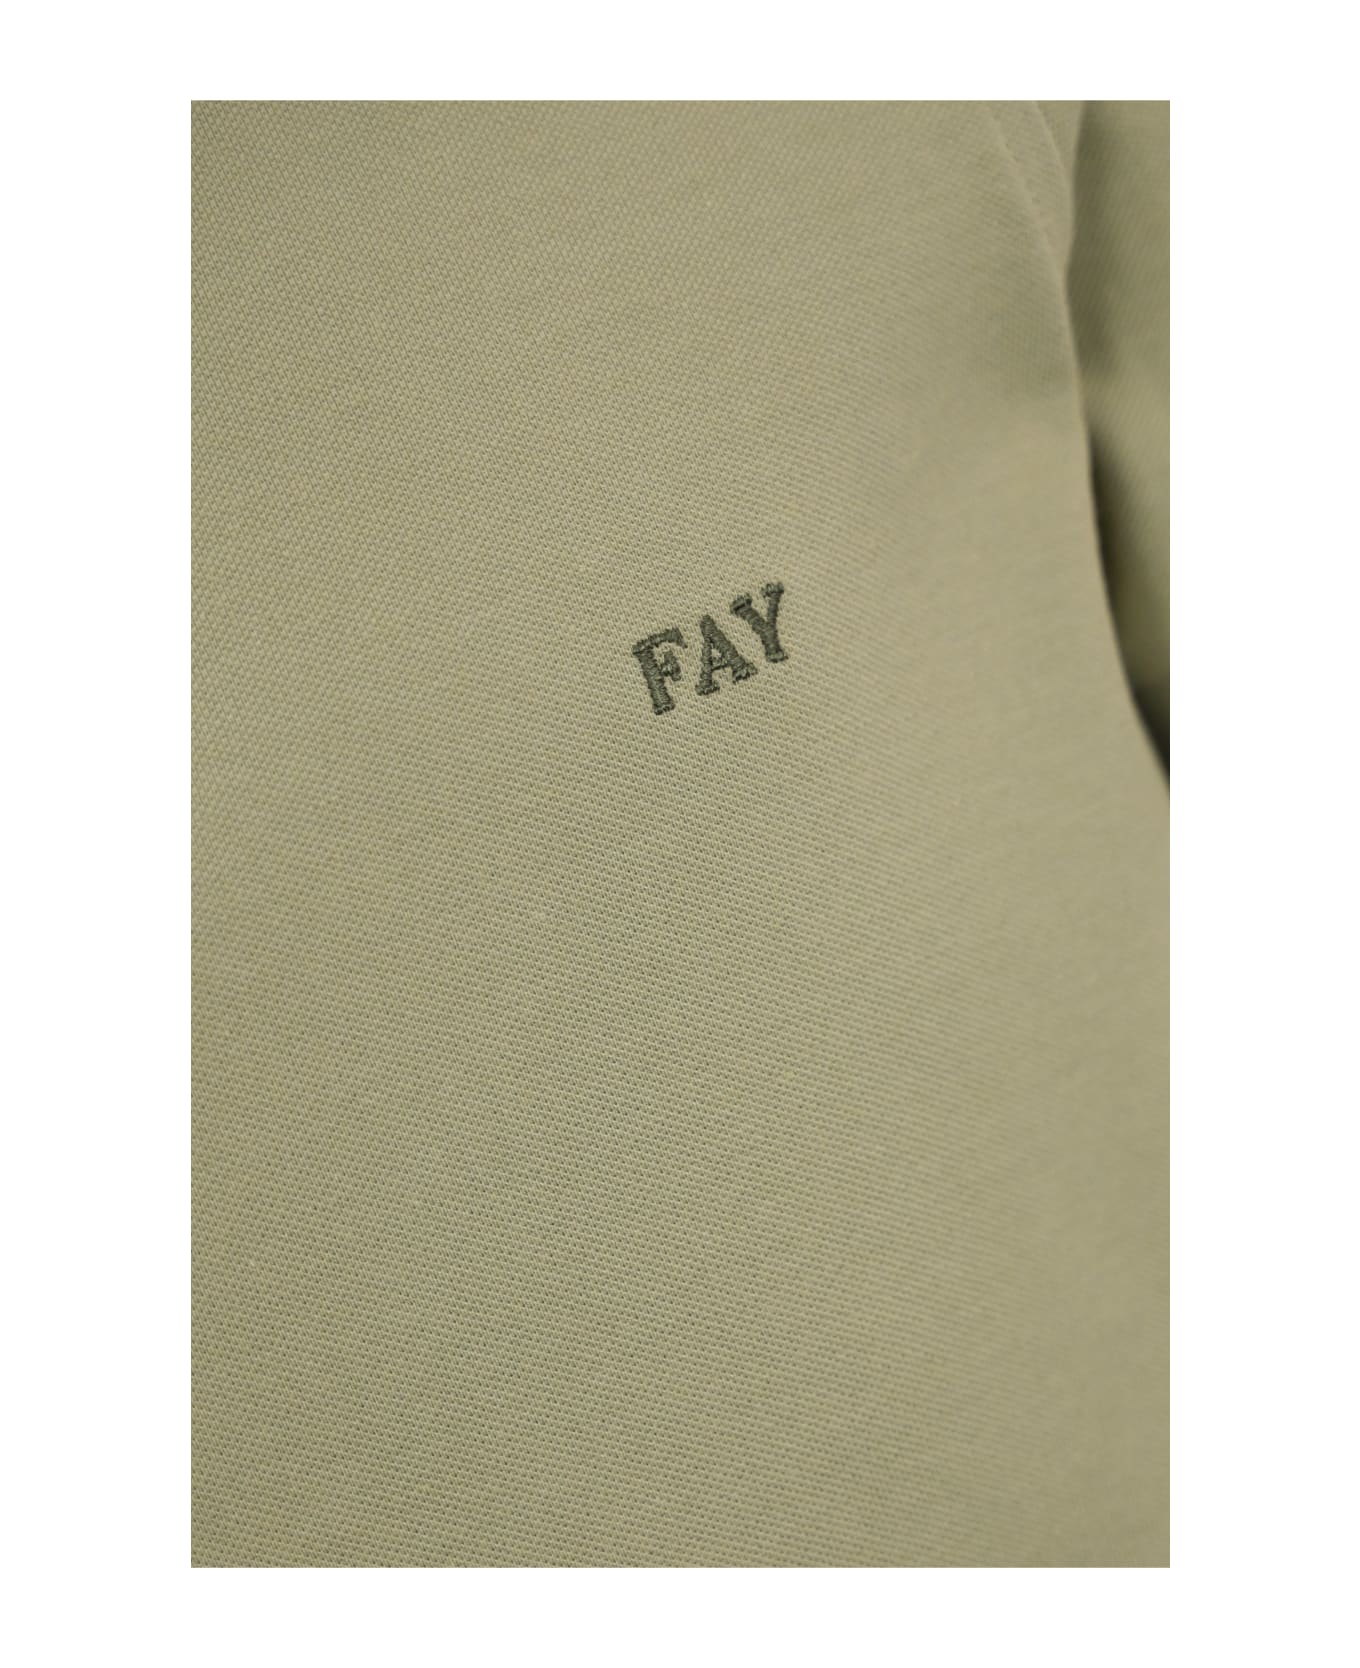 Fay Stretch Cotton Polo Shirt - SALVIA ポロシャツ